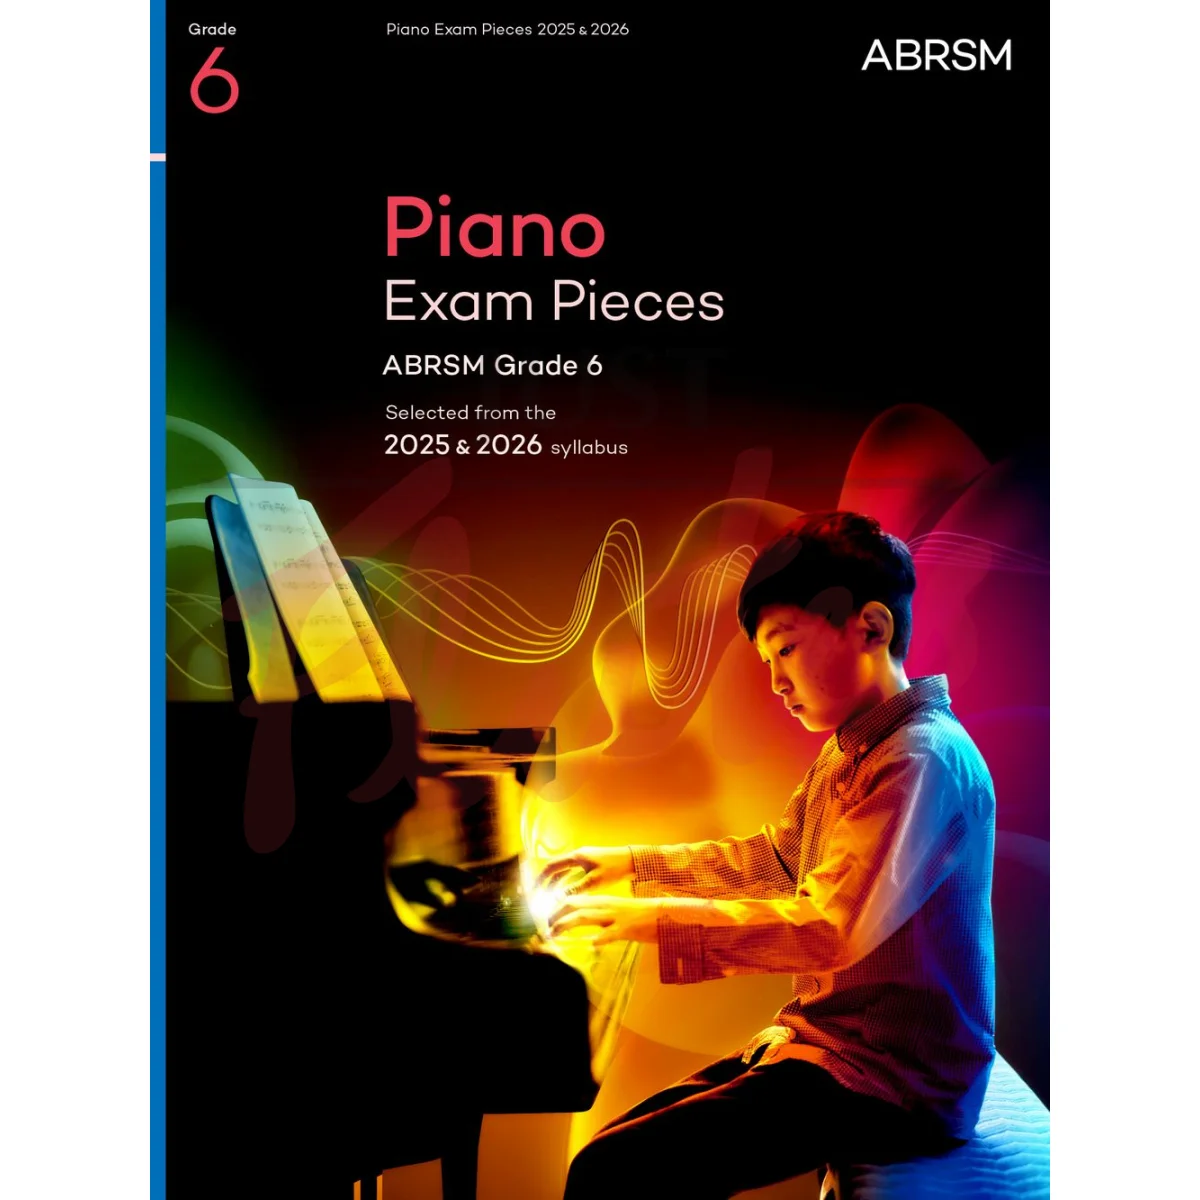 Piano Exam Pieces 2025-26, Grade 6